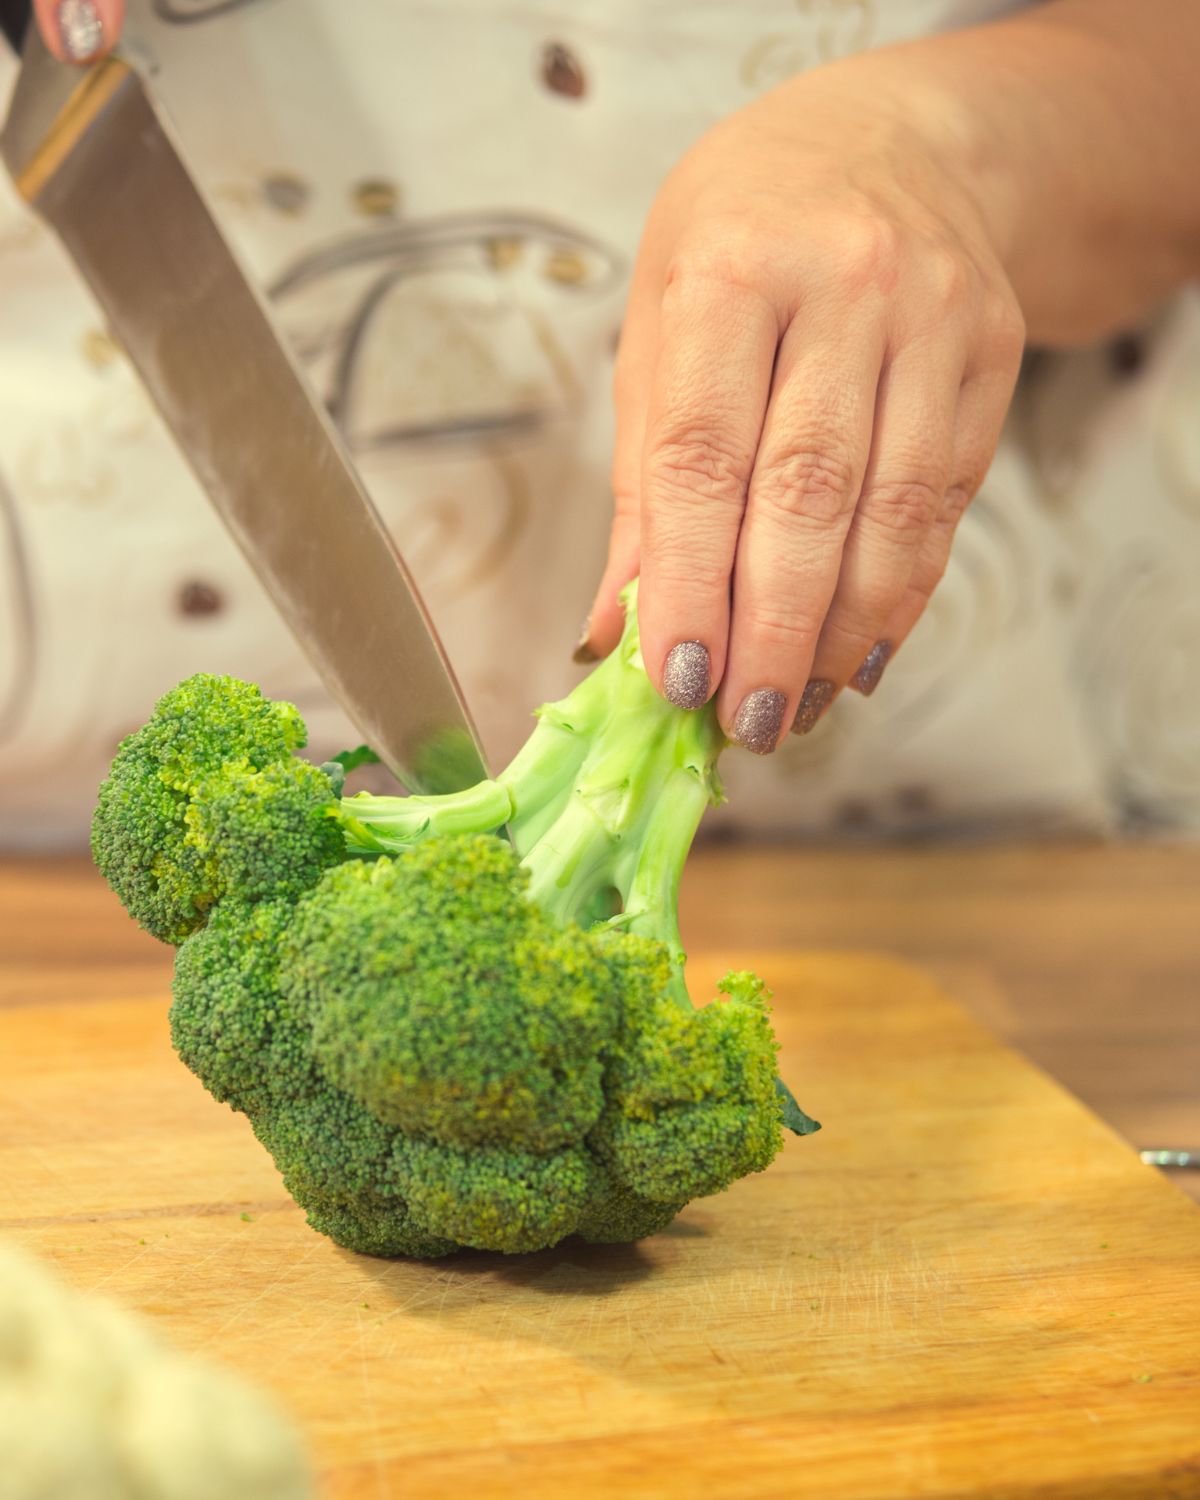 Cutting the broccoli.